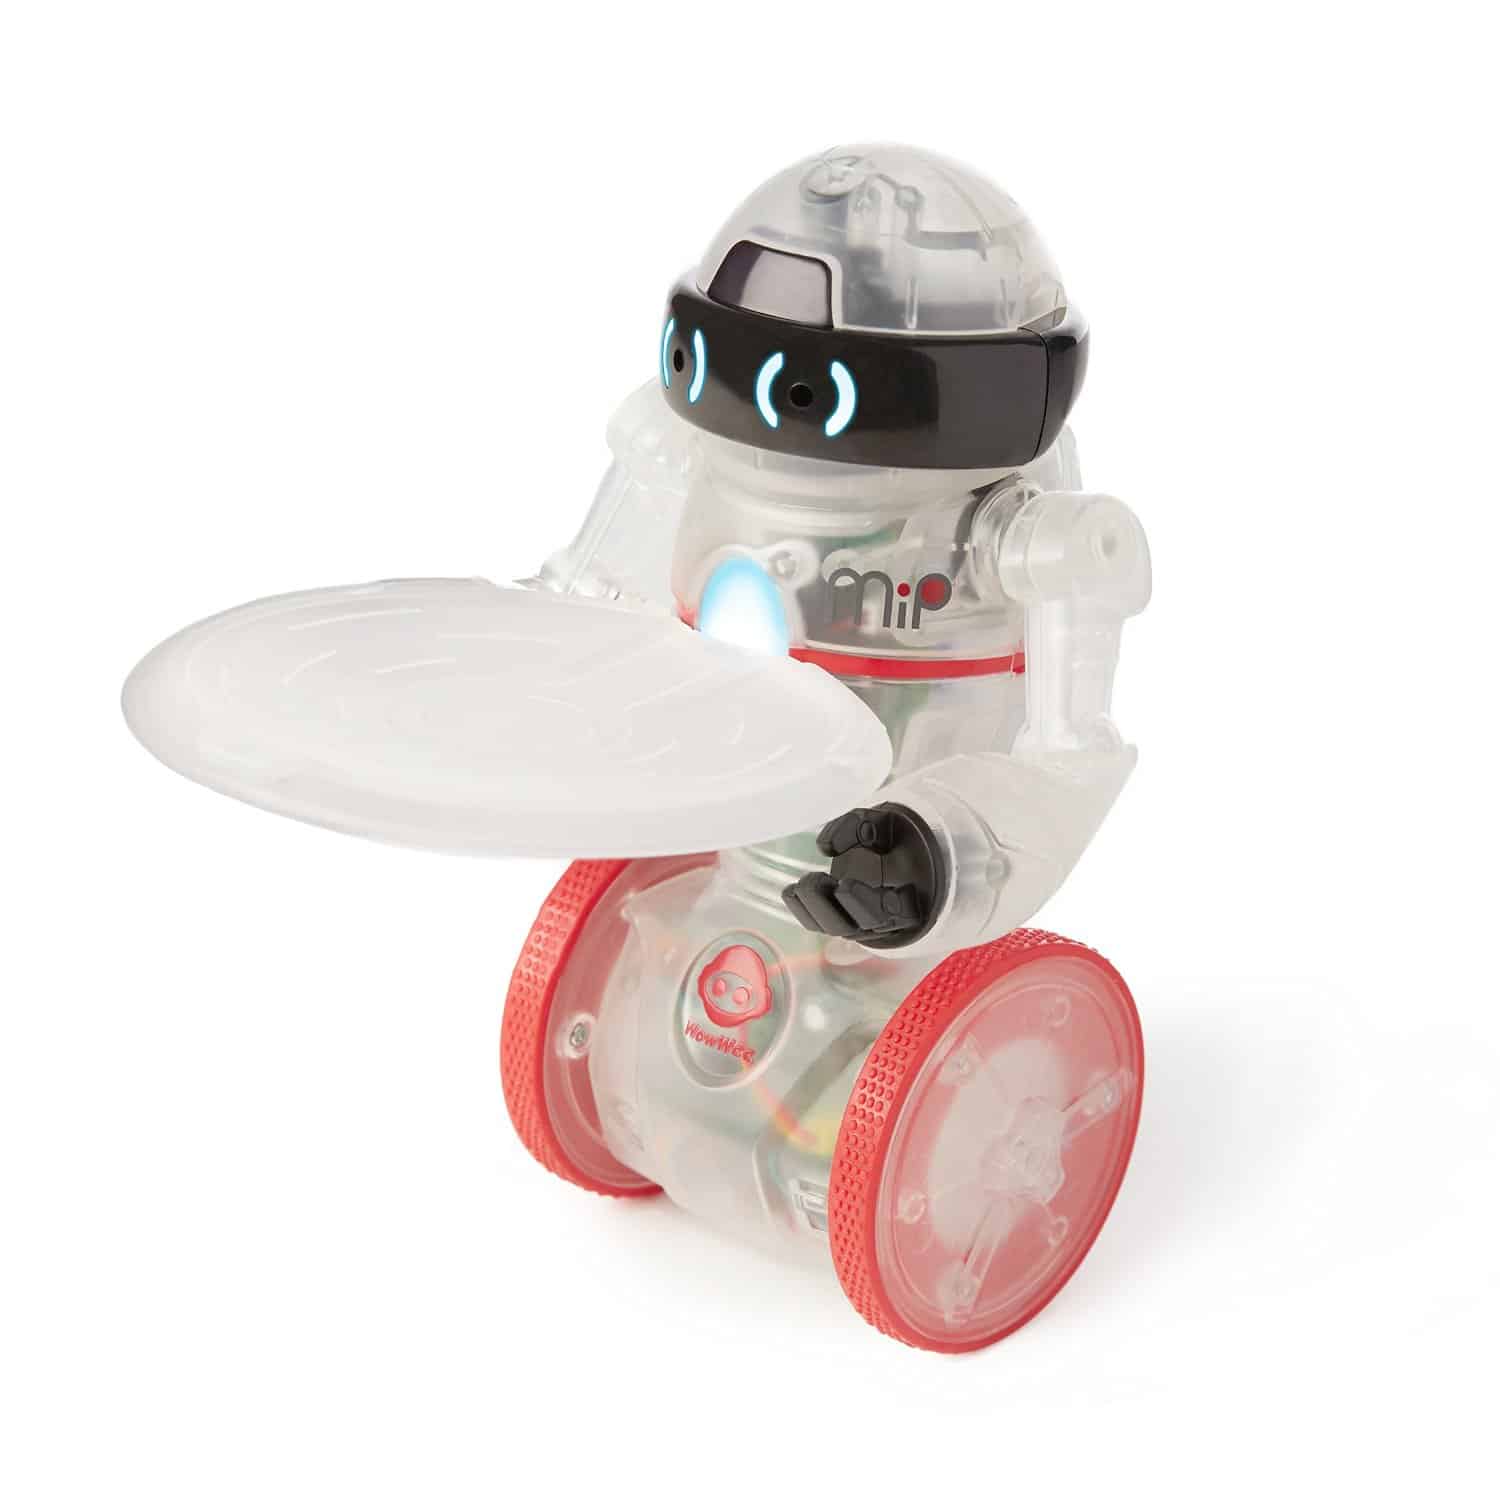 DEAL ALERT: WowWee Coder MiP Robot Toy – 50% off!